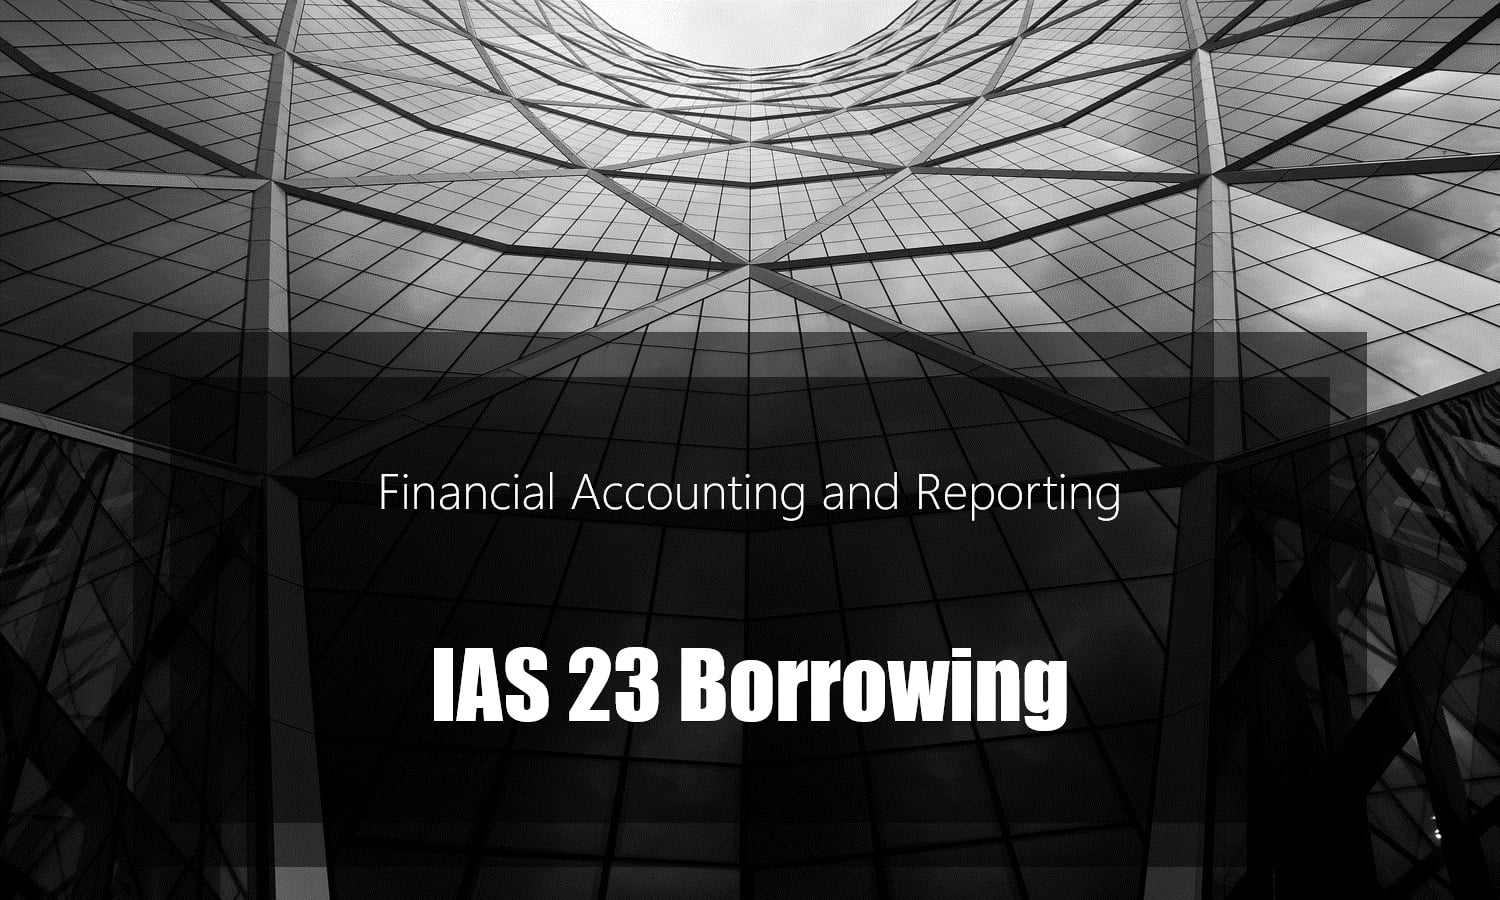 IAS 23 Borrowing Costs